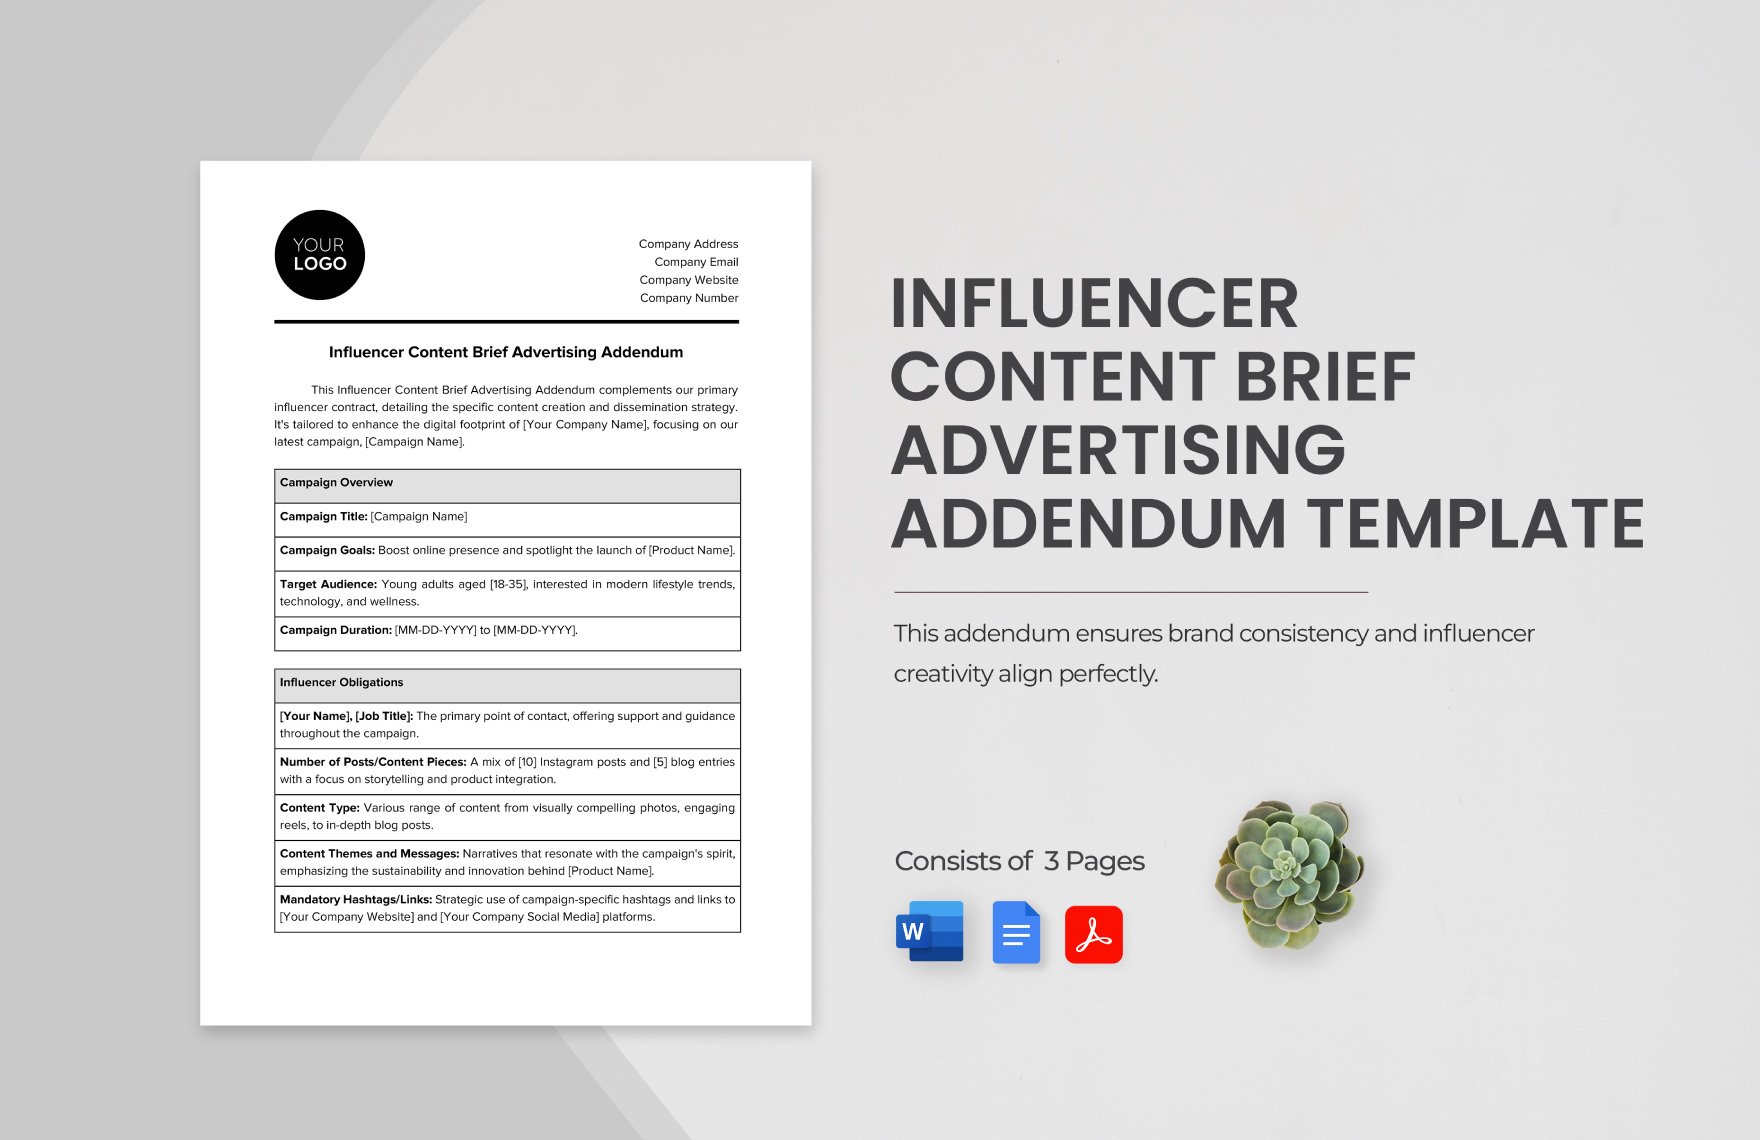 Influencer Content Brief Advertising Addendum Template